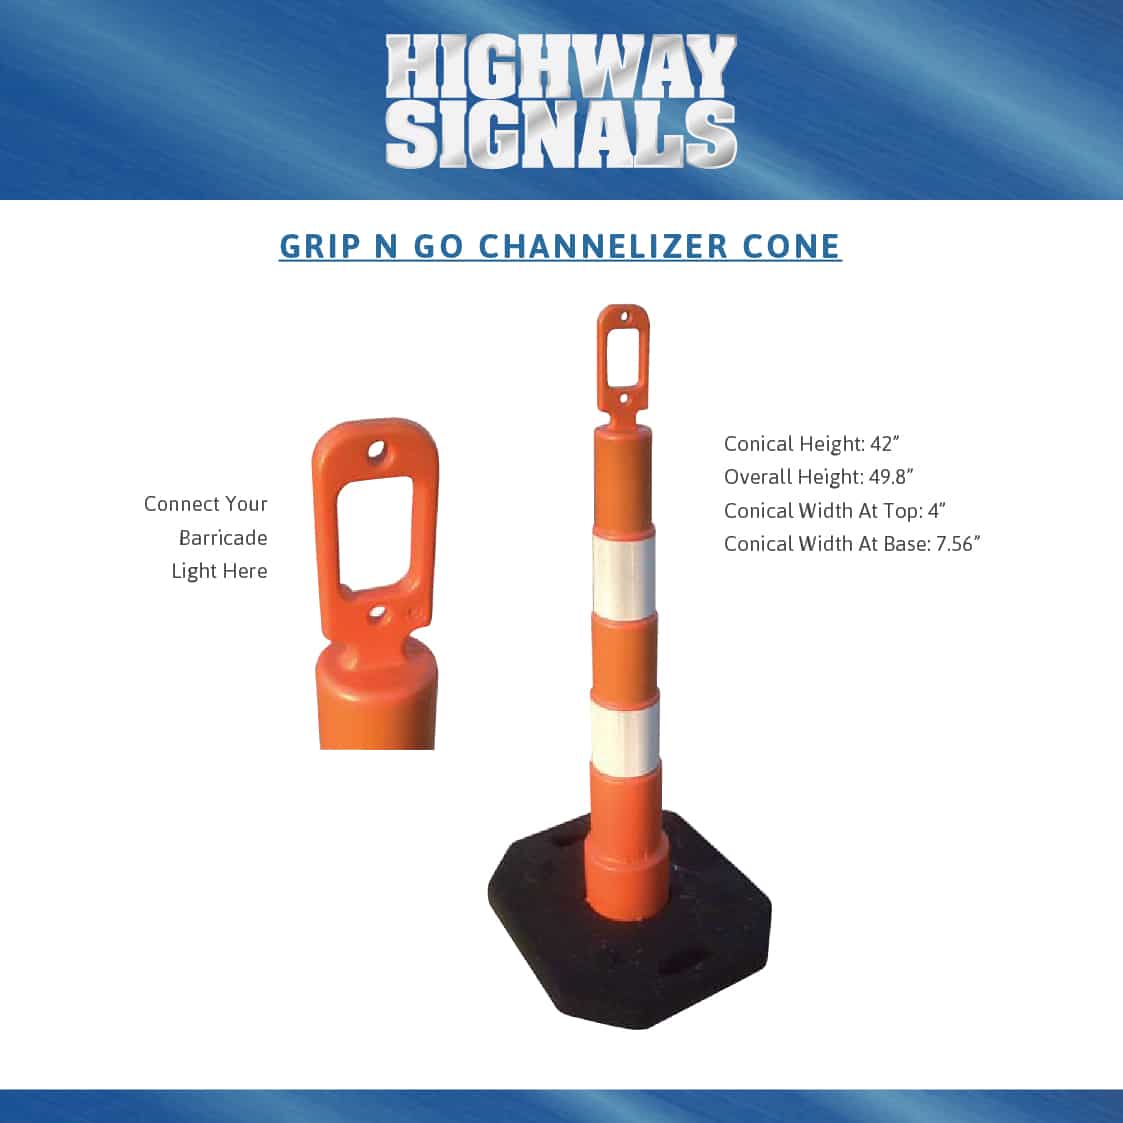 Grip N Go Channelizer Cone